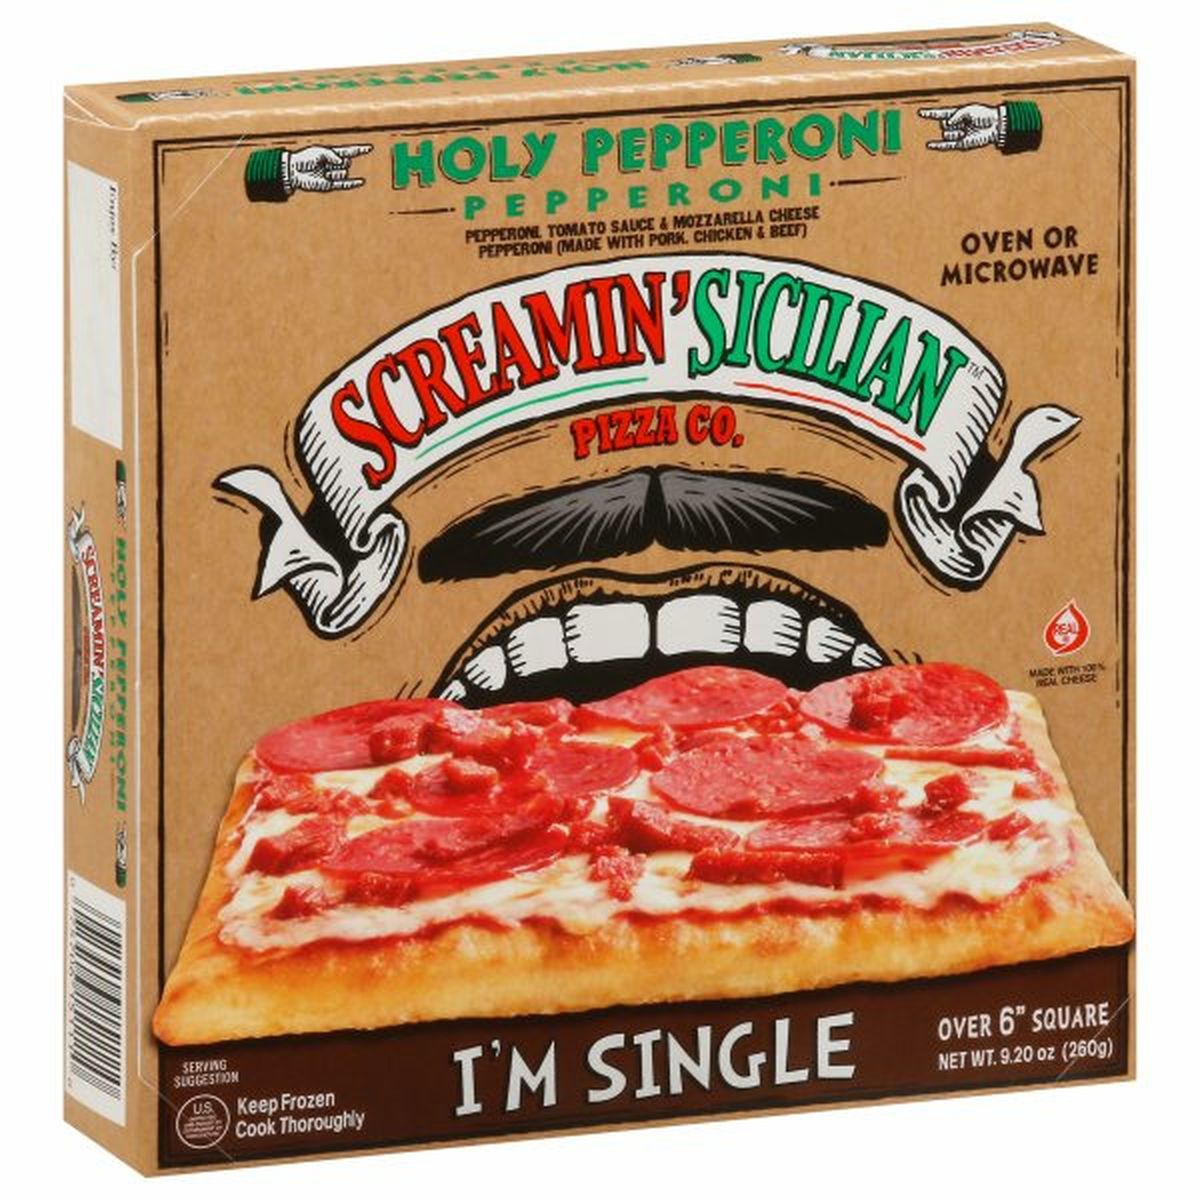 Calories in Screamin' Sicilian Pizza, Holy Pepperoni, I'm Single